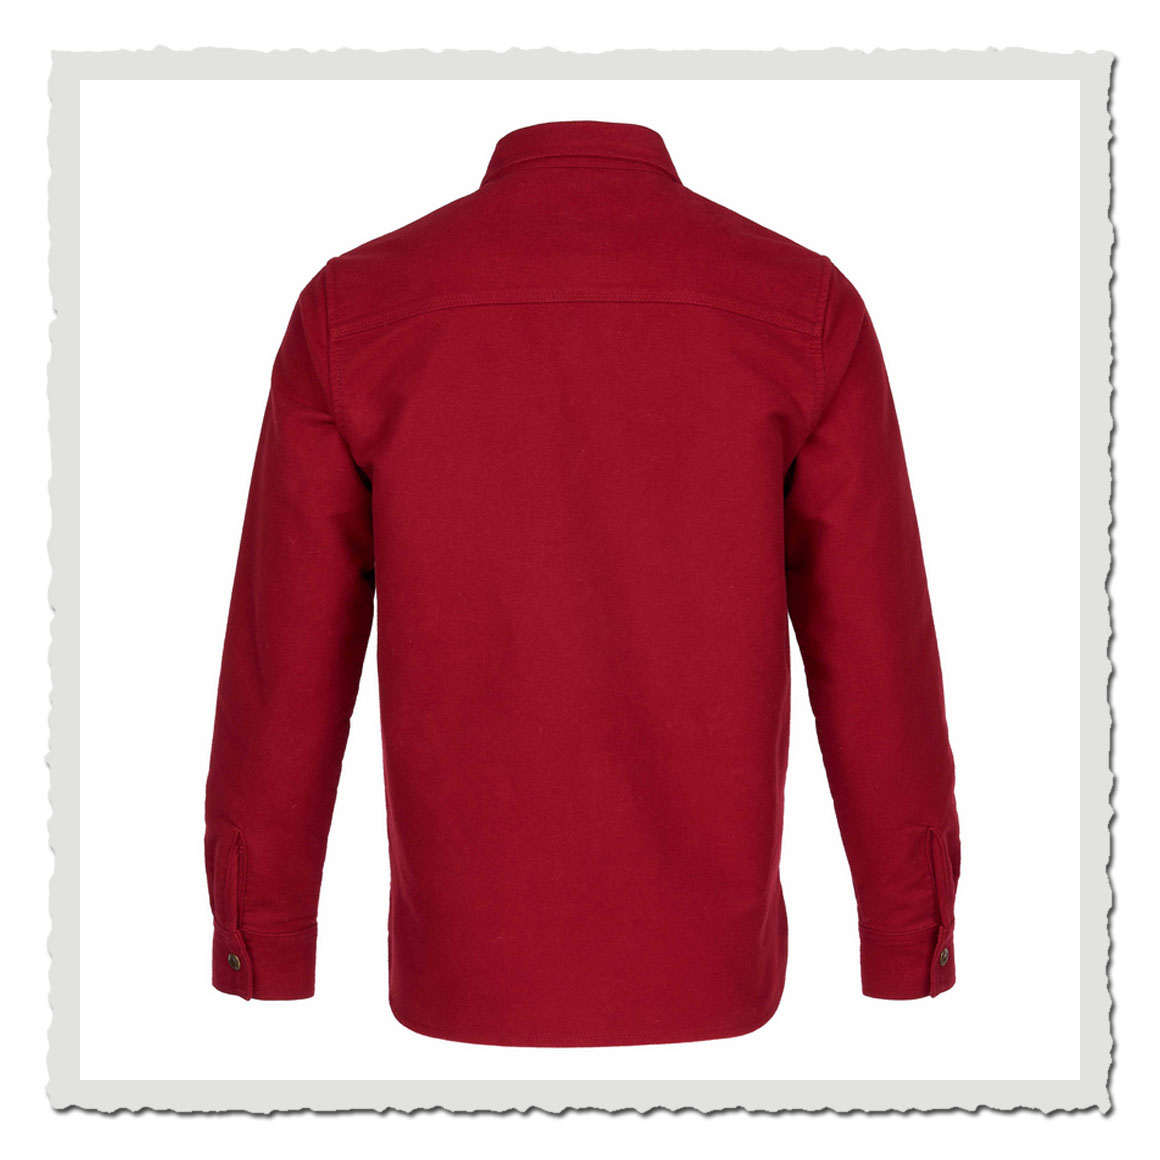 1943 CPO Shirt Moleskin dark red